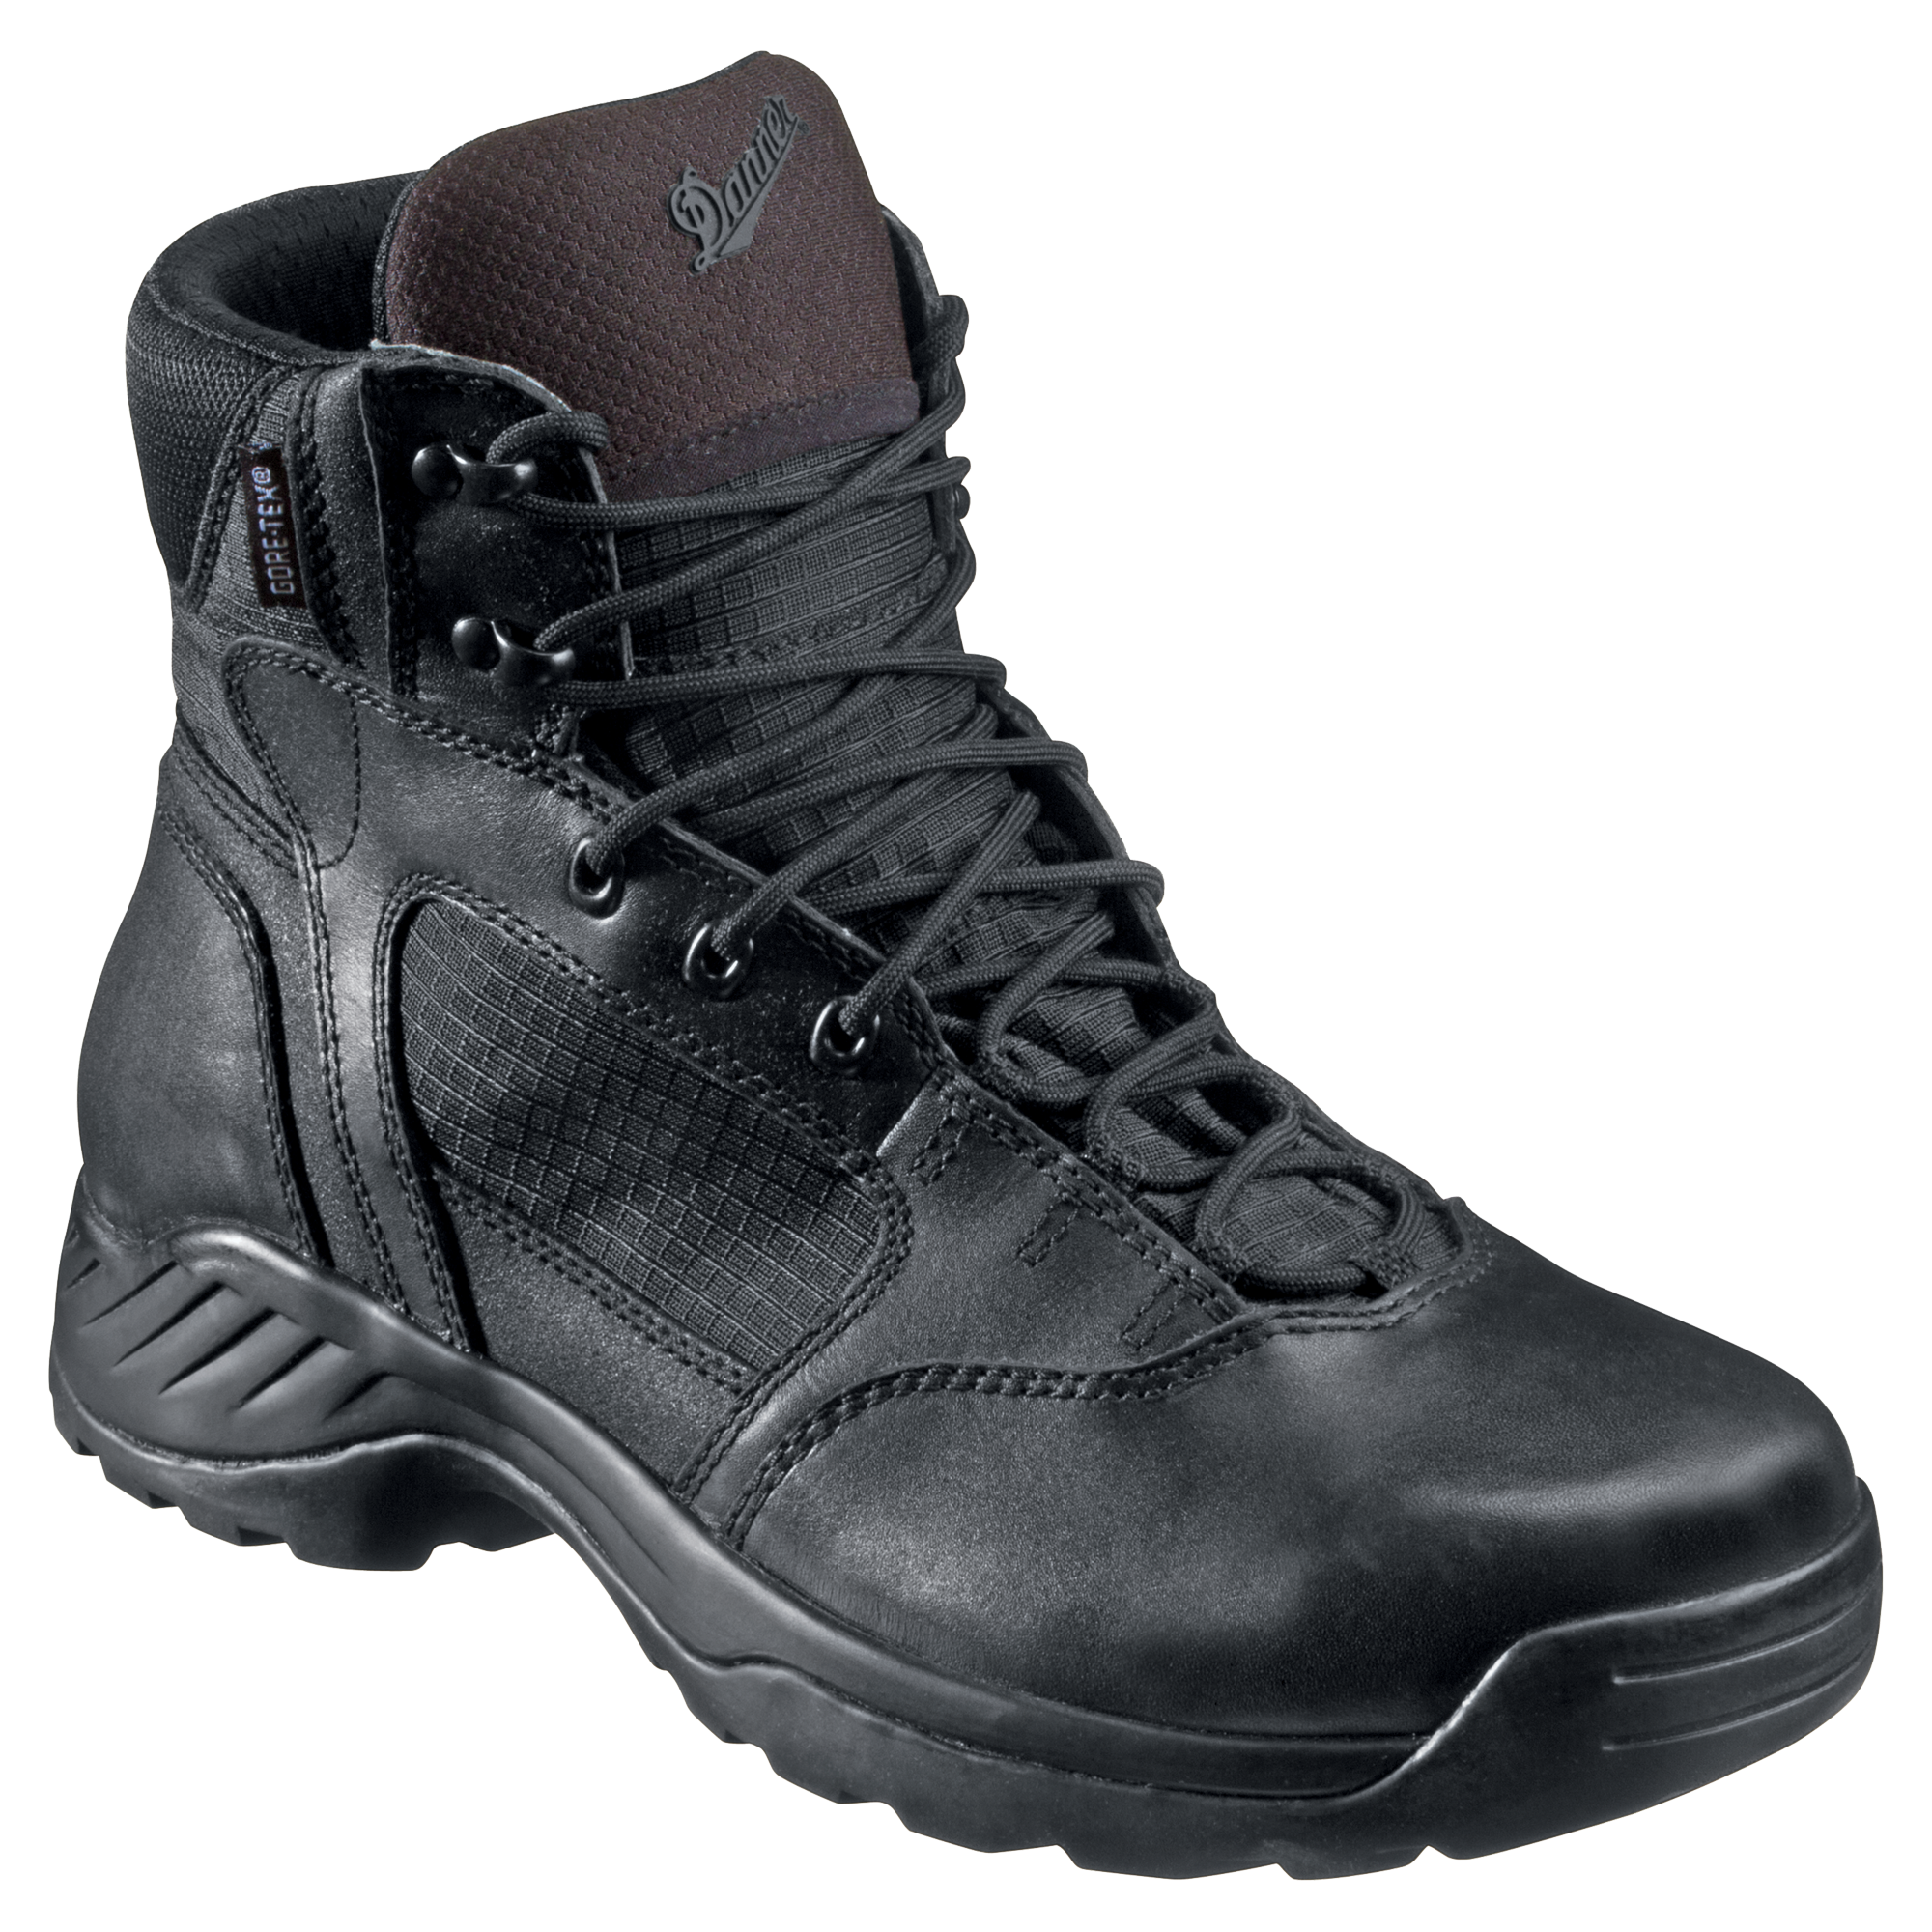 Danner Kinetic Side-Zip GORE-TEX Work Boots for Men - Black - 7.5M